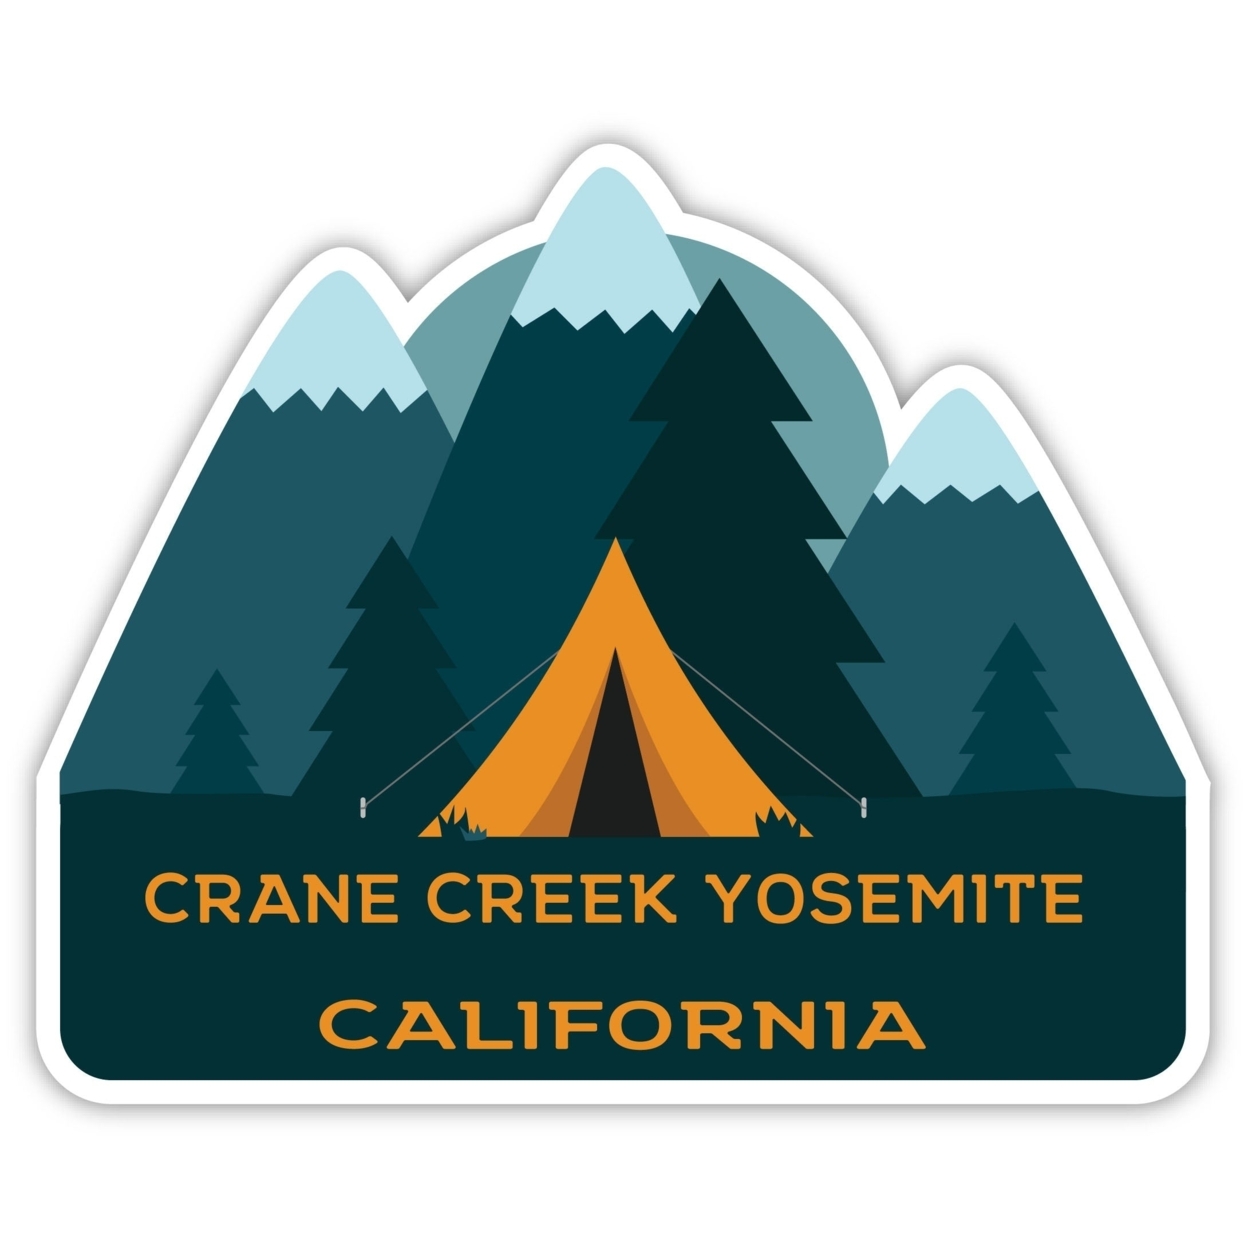 Crane Creek Yosemite California Souvenir Decorative Stickers (Choose Theme And Size) - 4-Pack, 2-Inch, Tent